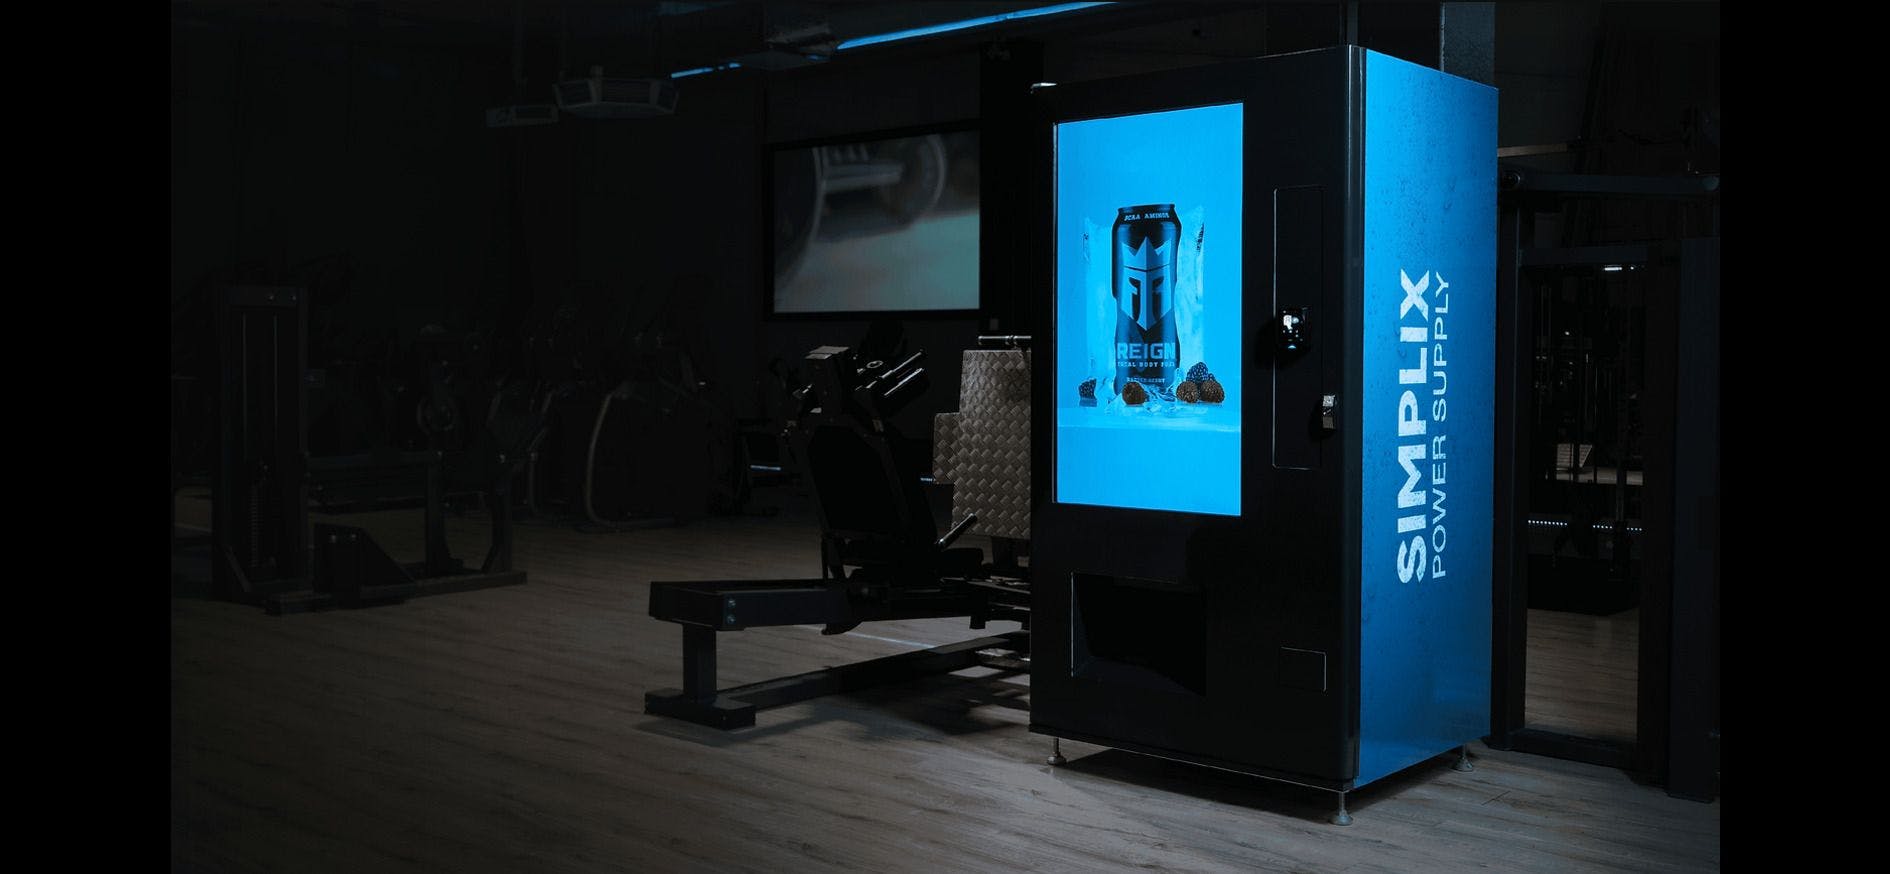 Smart vending machine in a gym